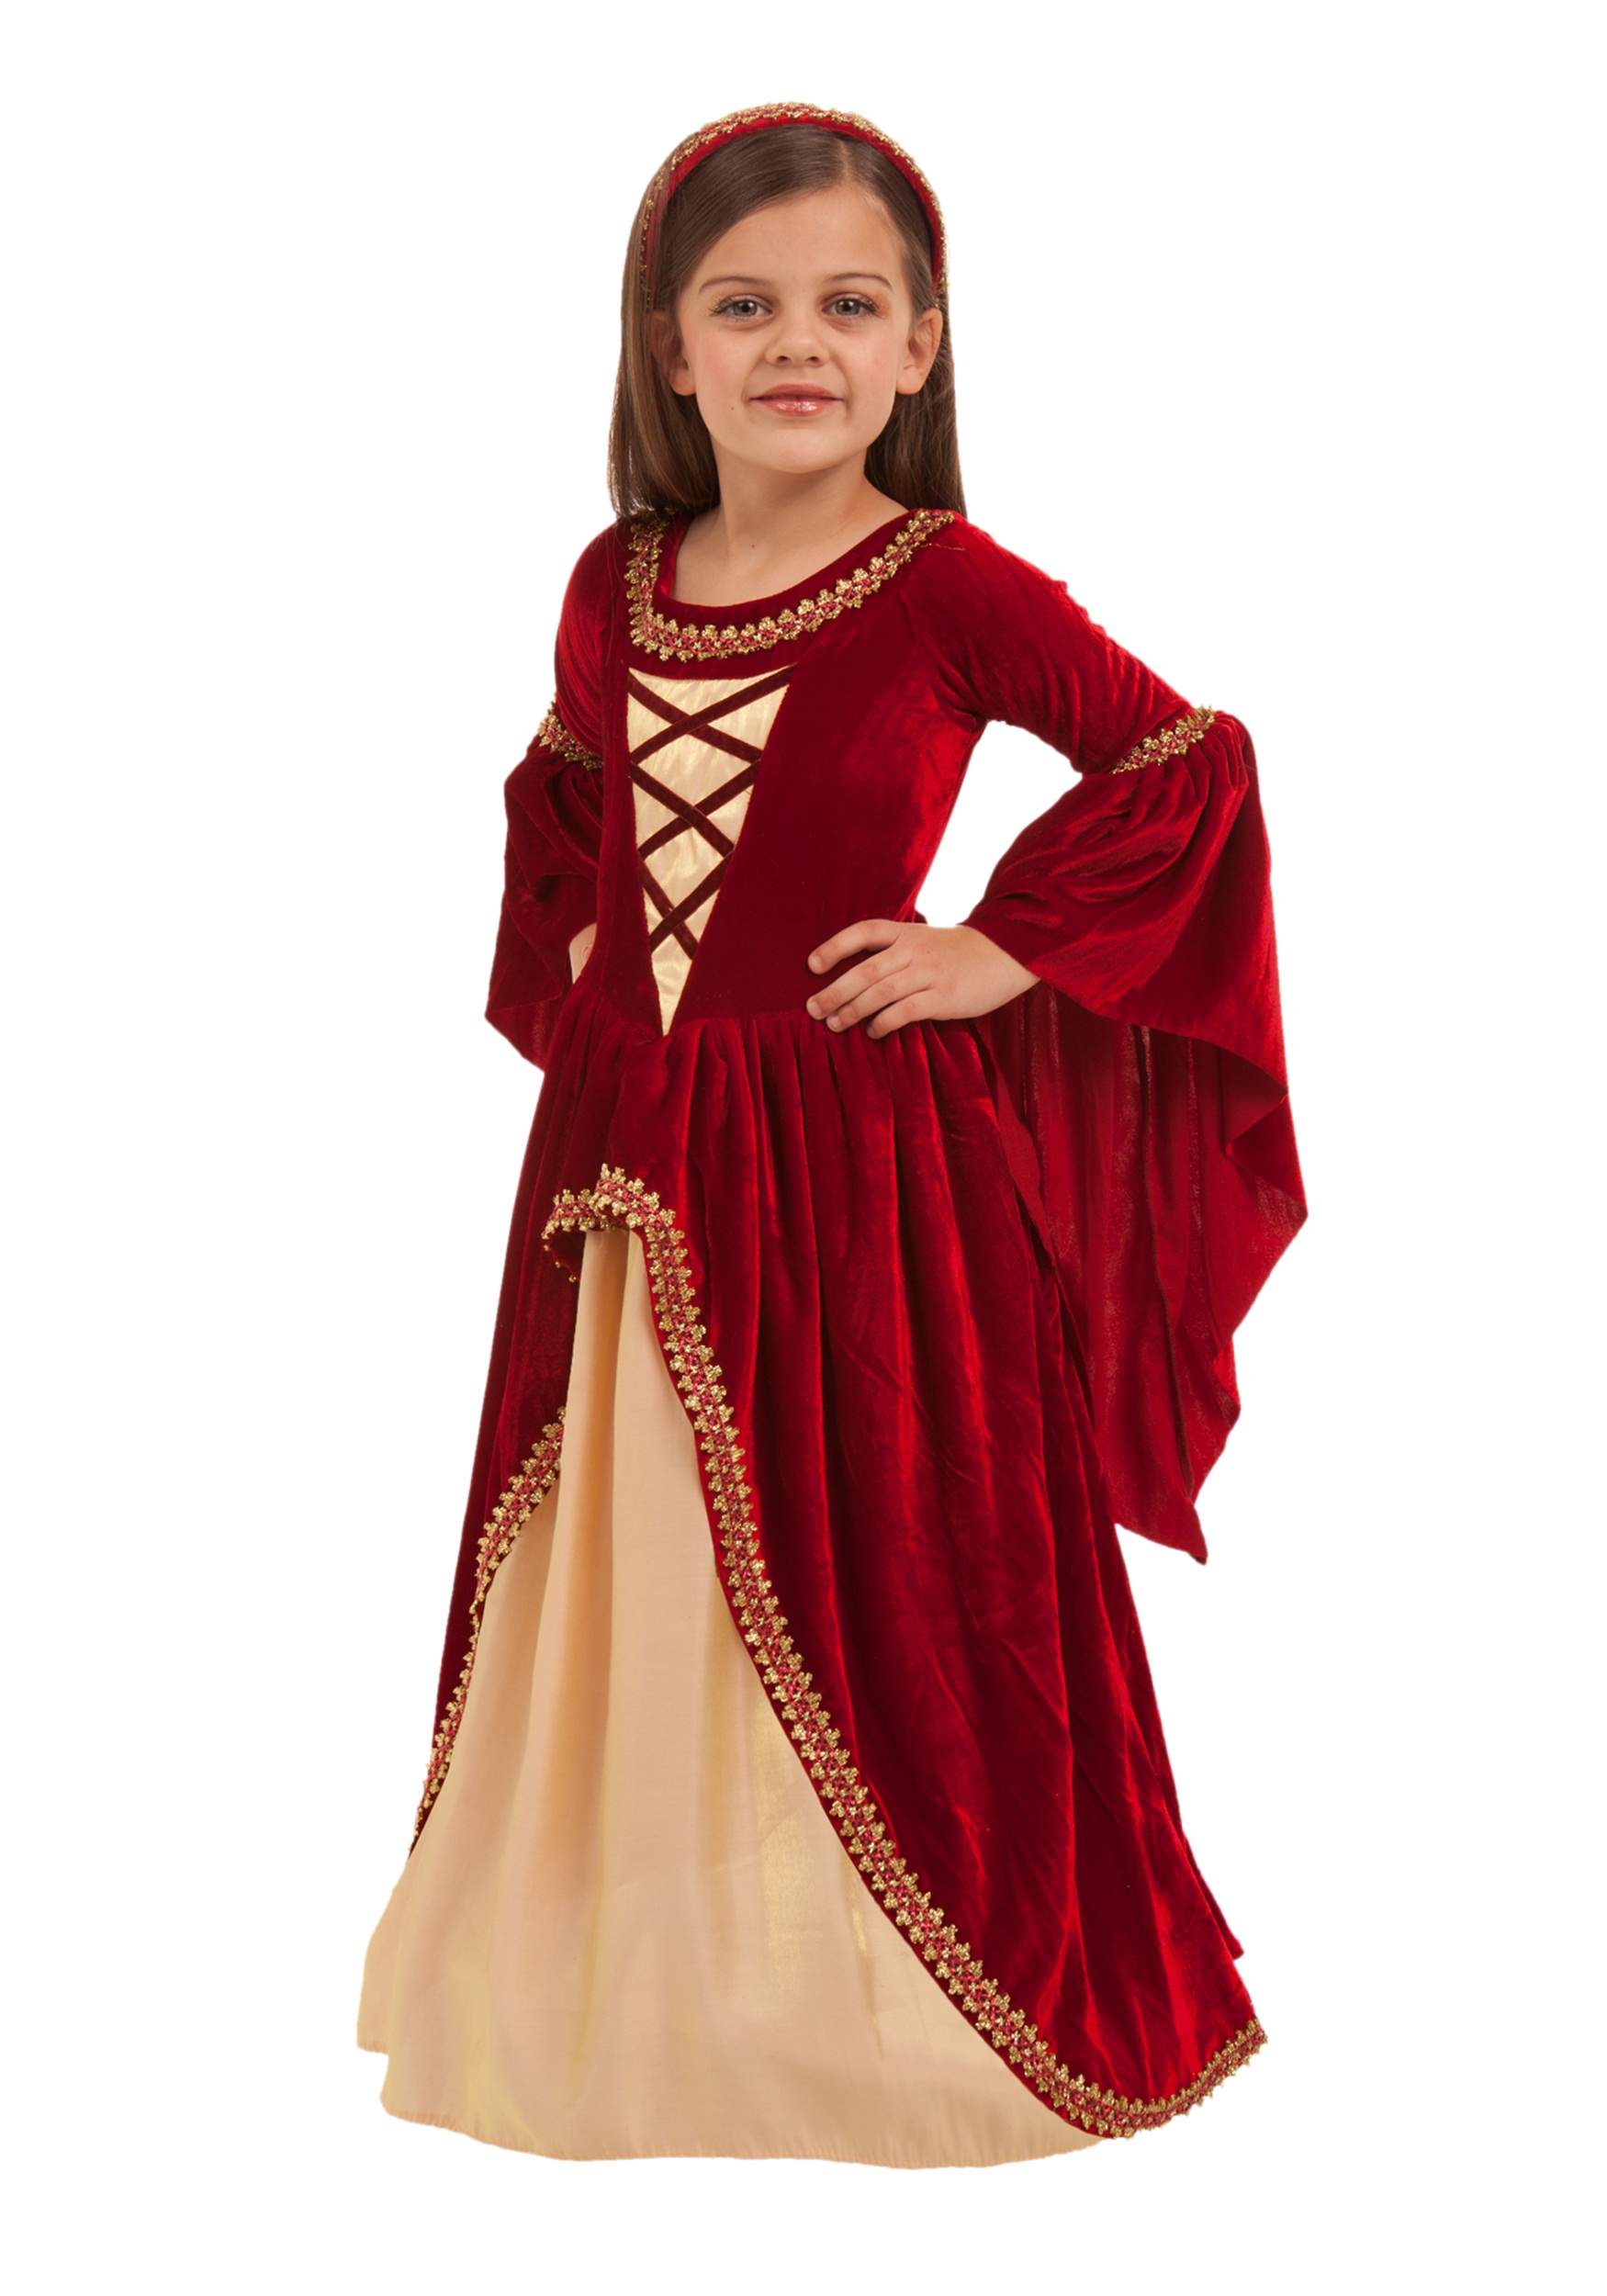 Alessandra the Crimson Princess Girl's Costume